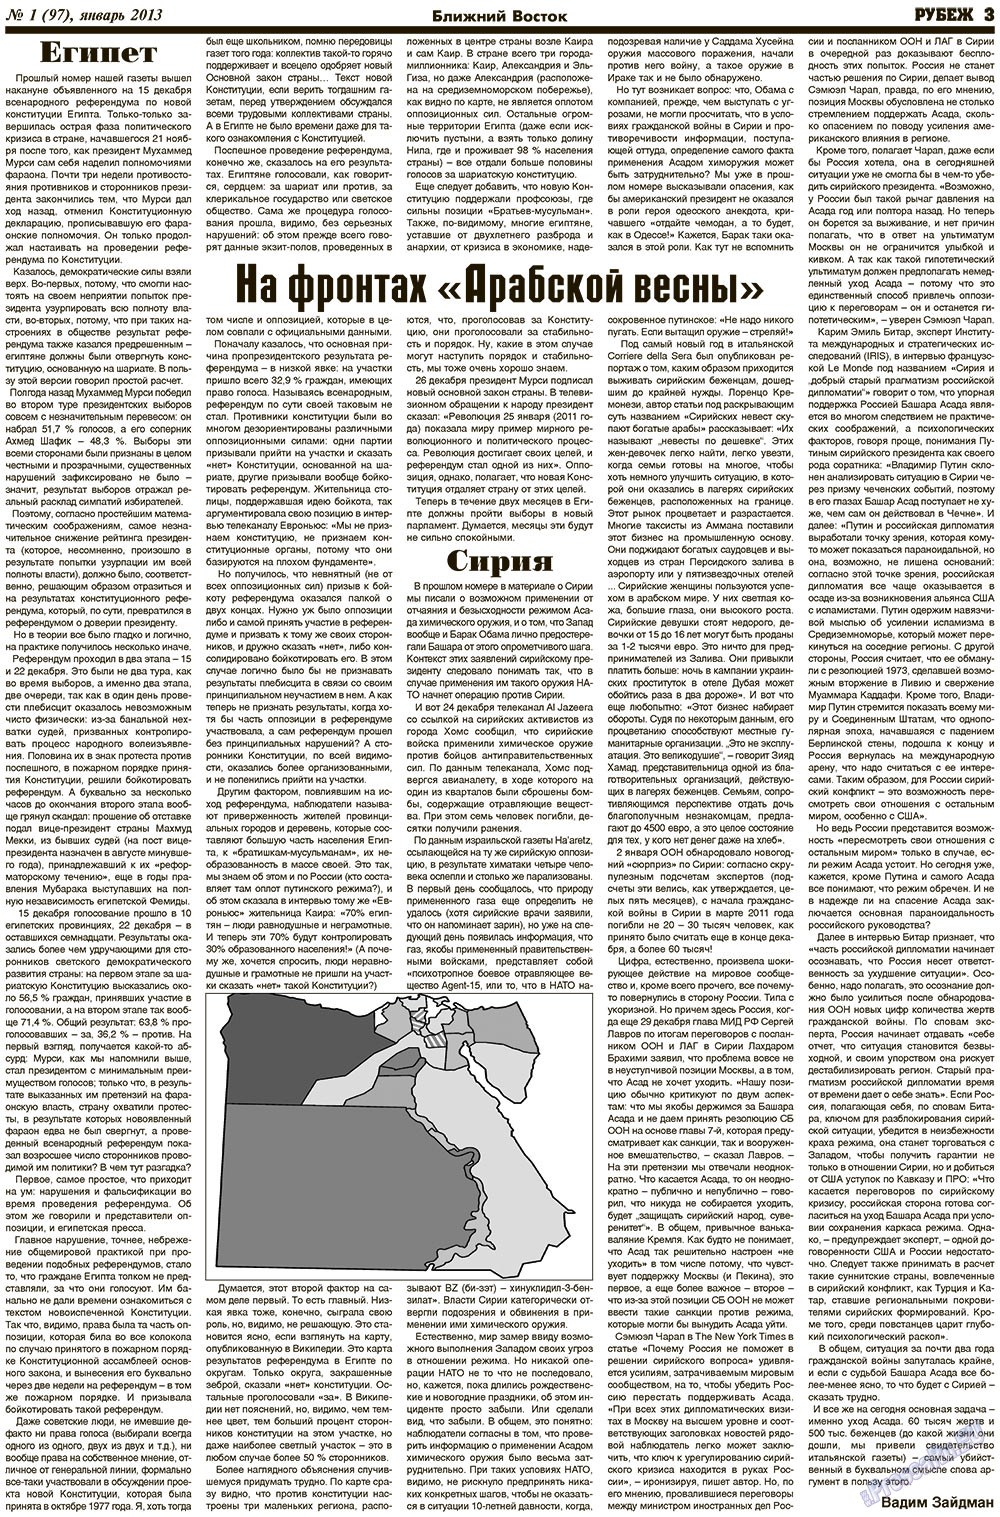 Рубеж, газета. 2013 №1 стр.3